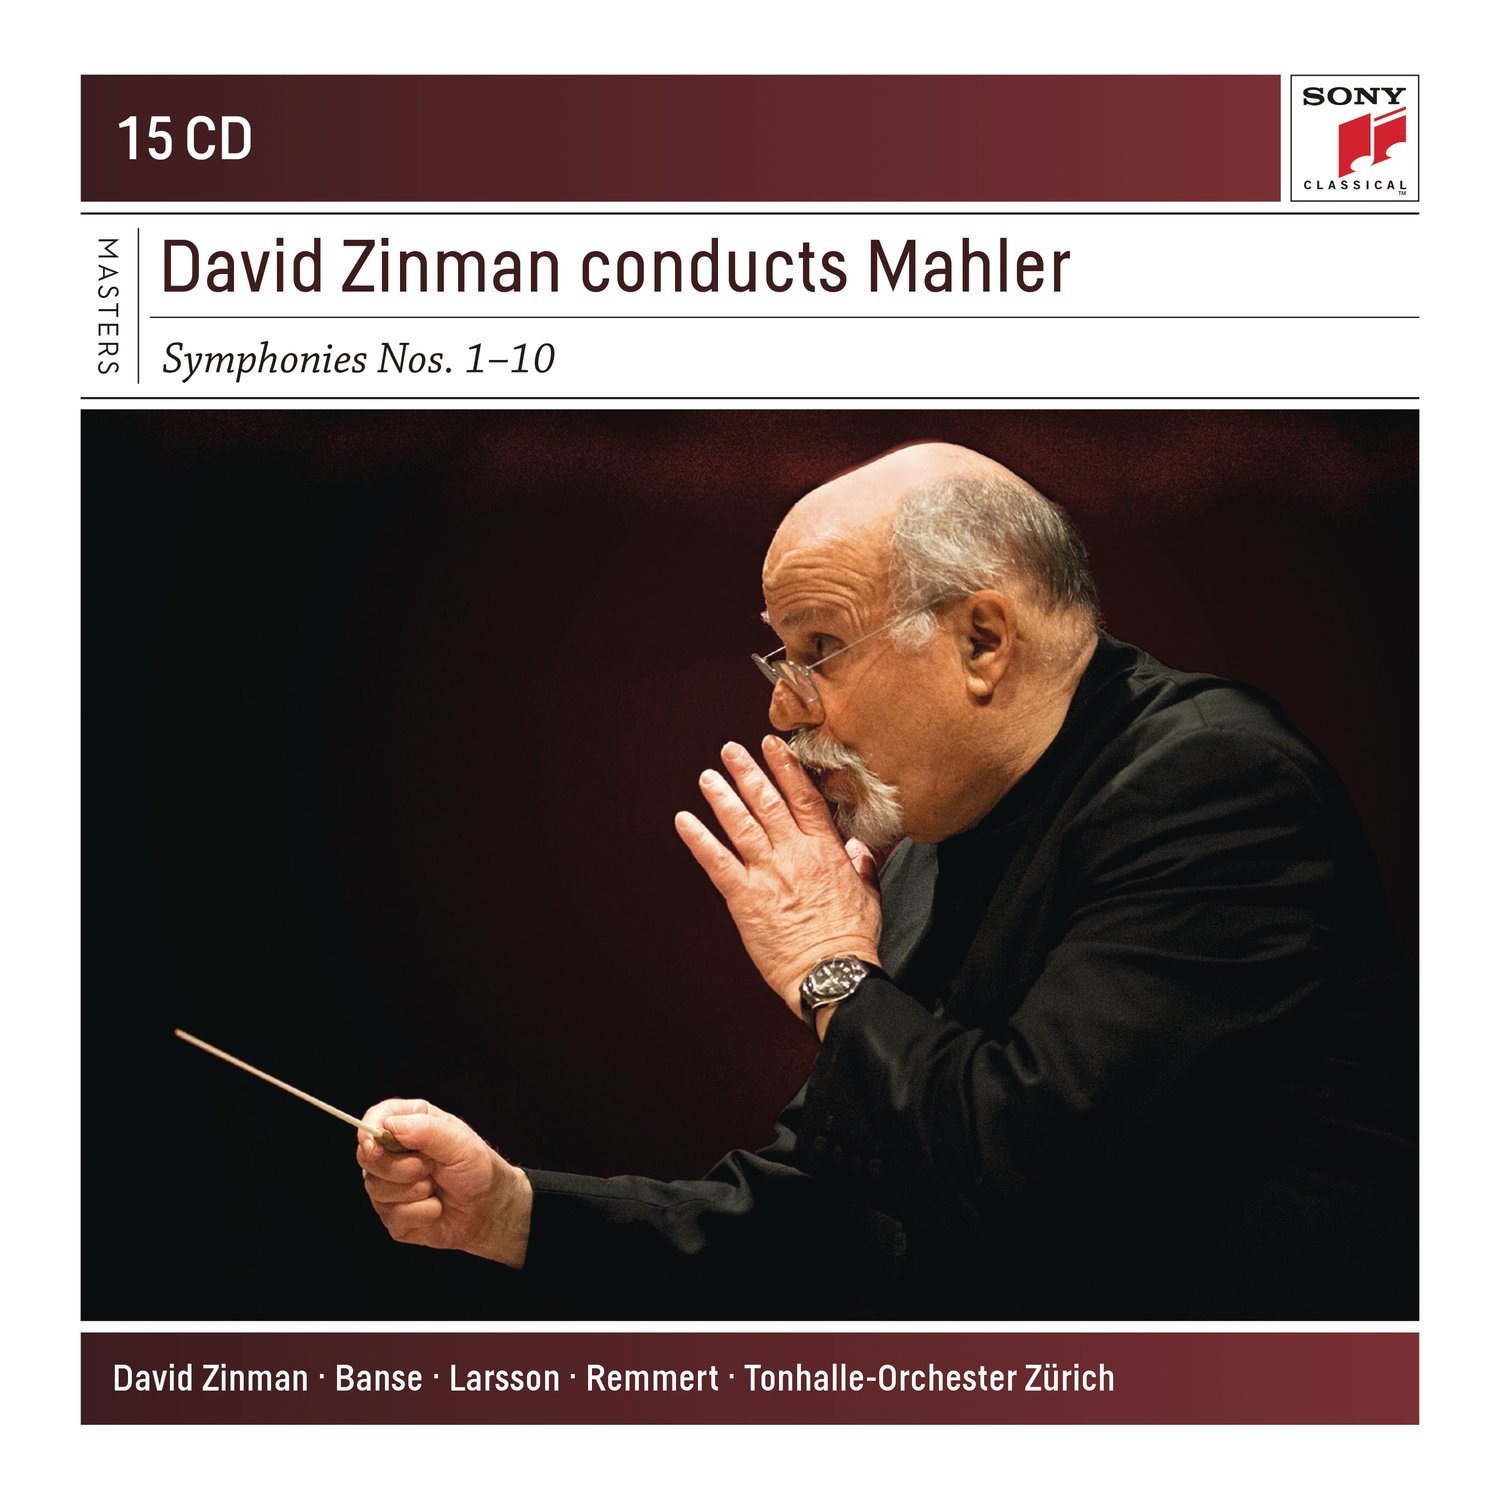 David Zinman Conducts Mahler Symphonies - CD | David Zinman, Gustav Mahler, Tonhalle-Orchester Zurich